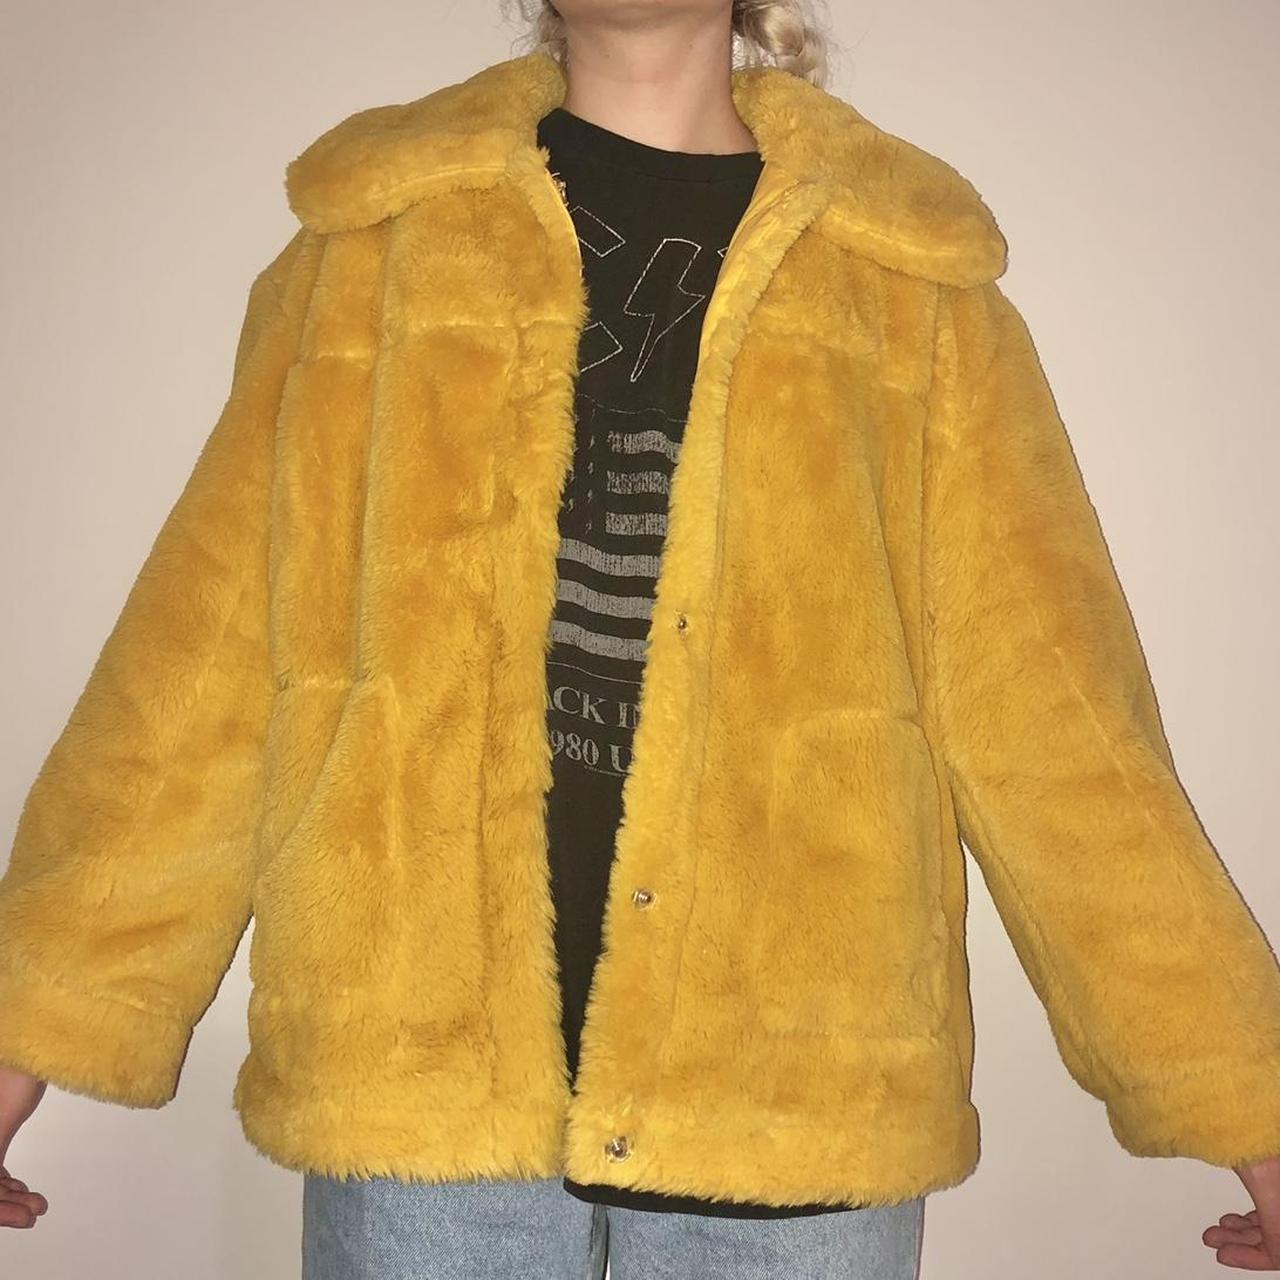 Bright yellow fur coat Faux fur!! Vintage!!! Has zip... - Depop